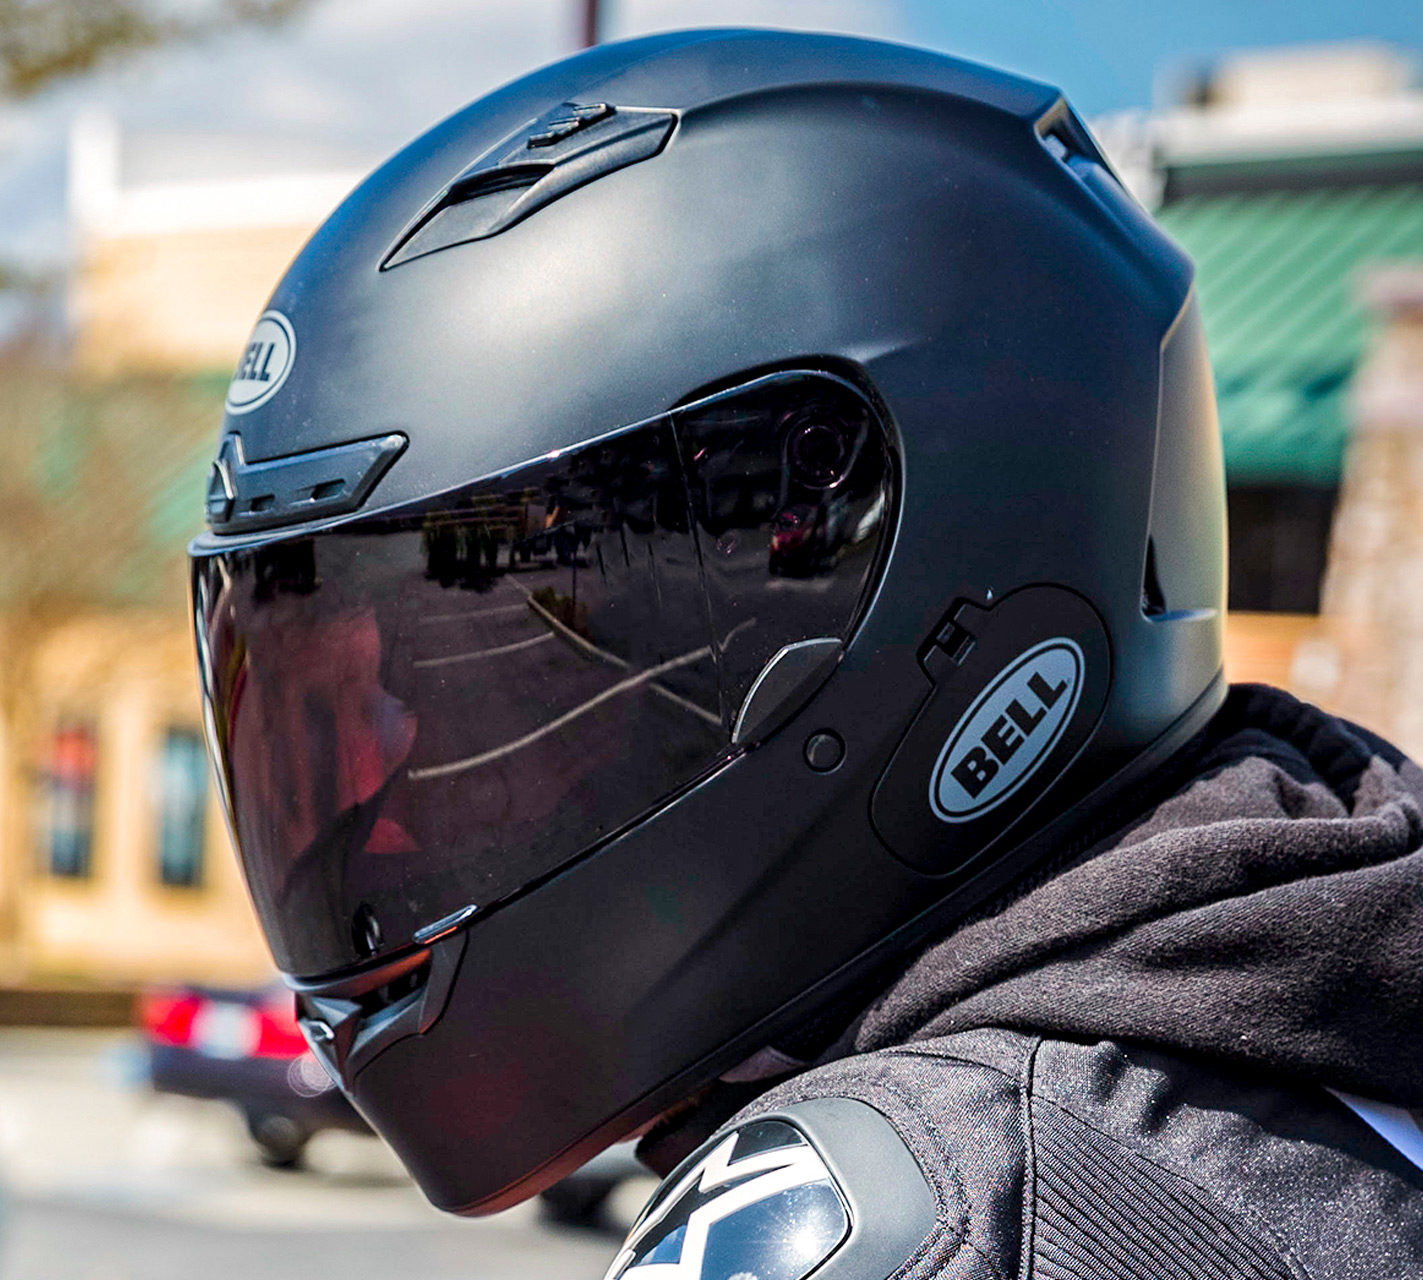 Head shot of rider wearing a helmet